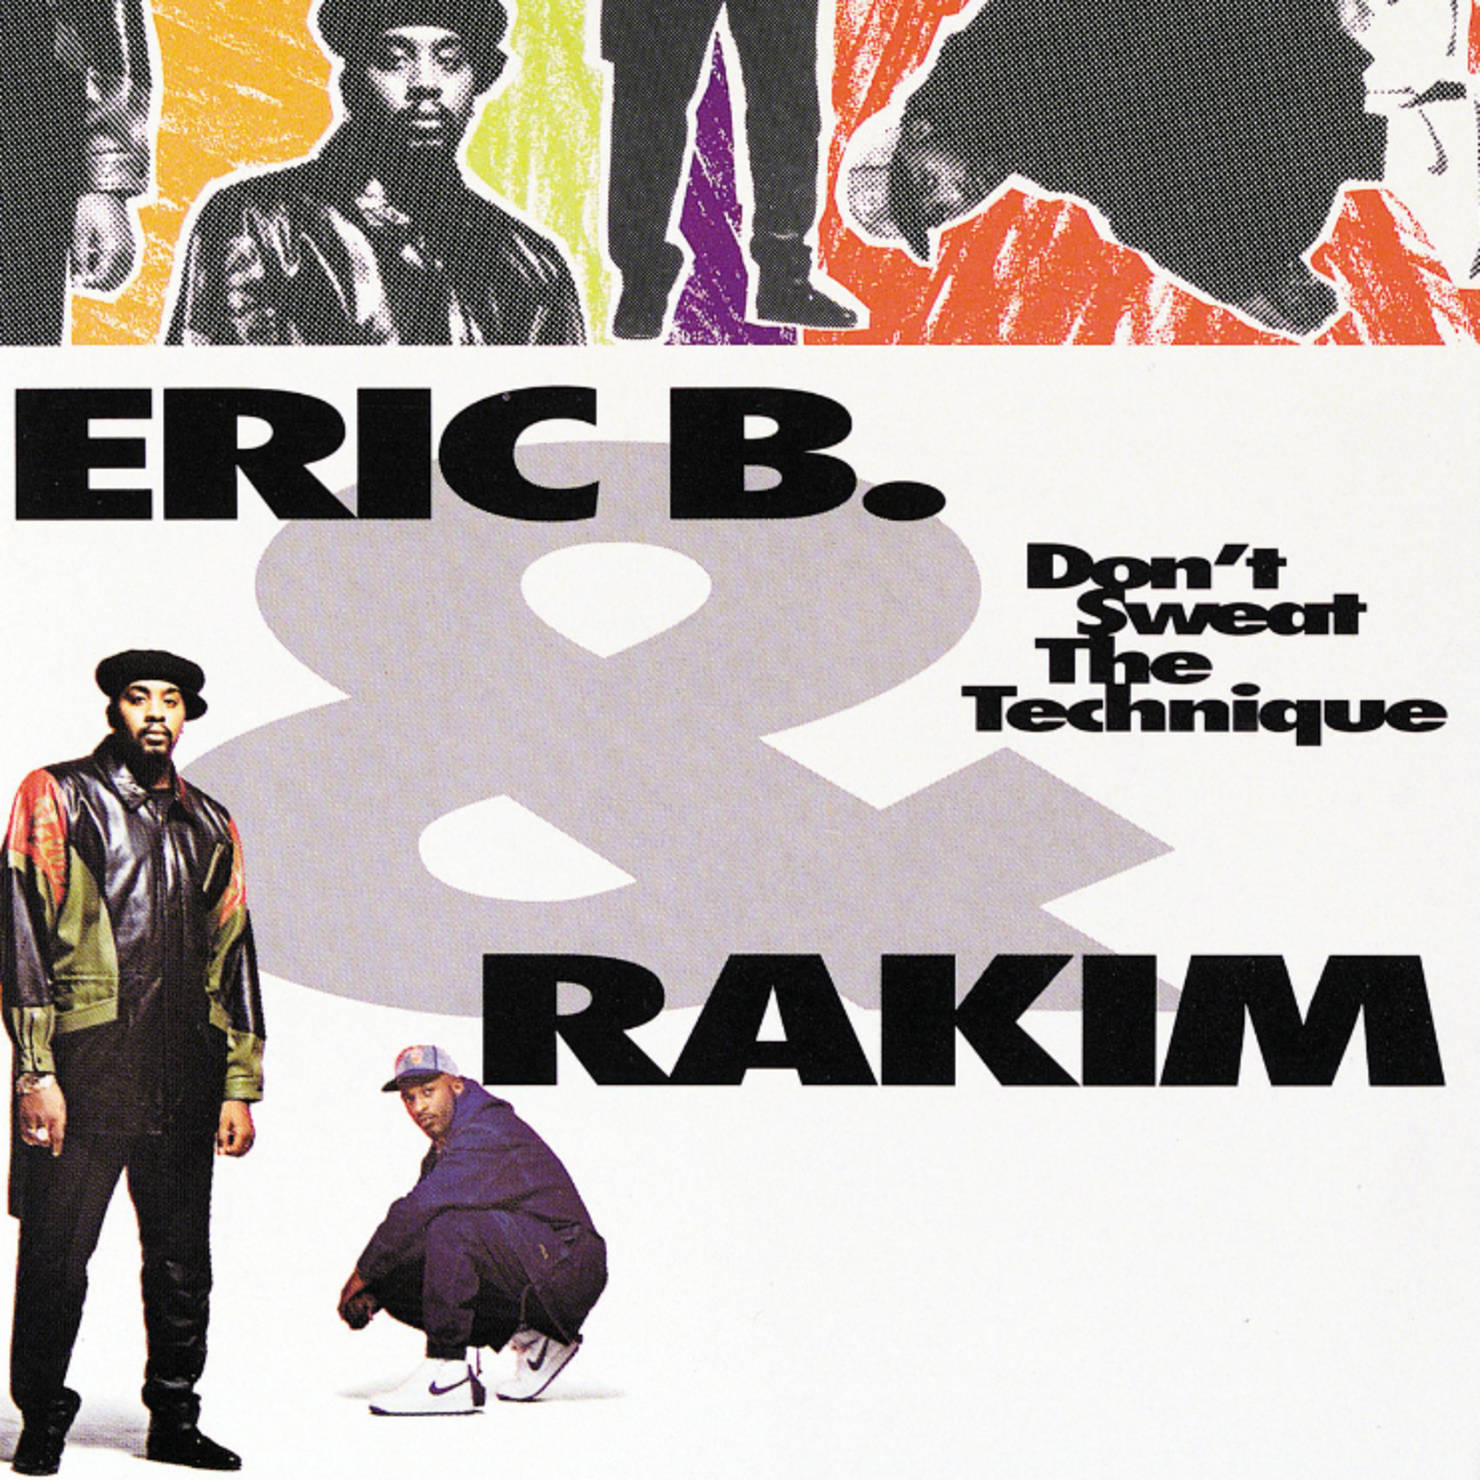 Eric B And Rakim Don't Sweat the Technique Album Wallpaper